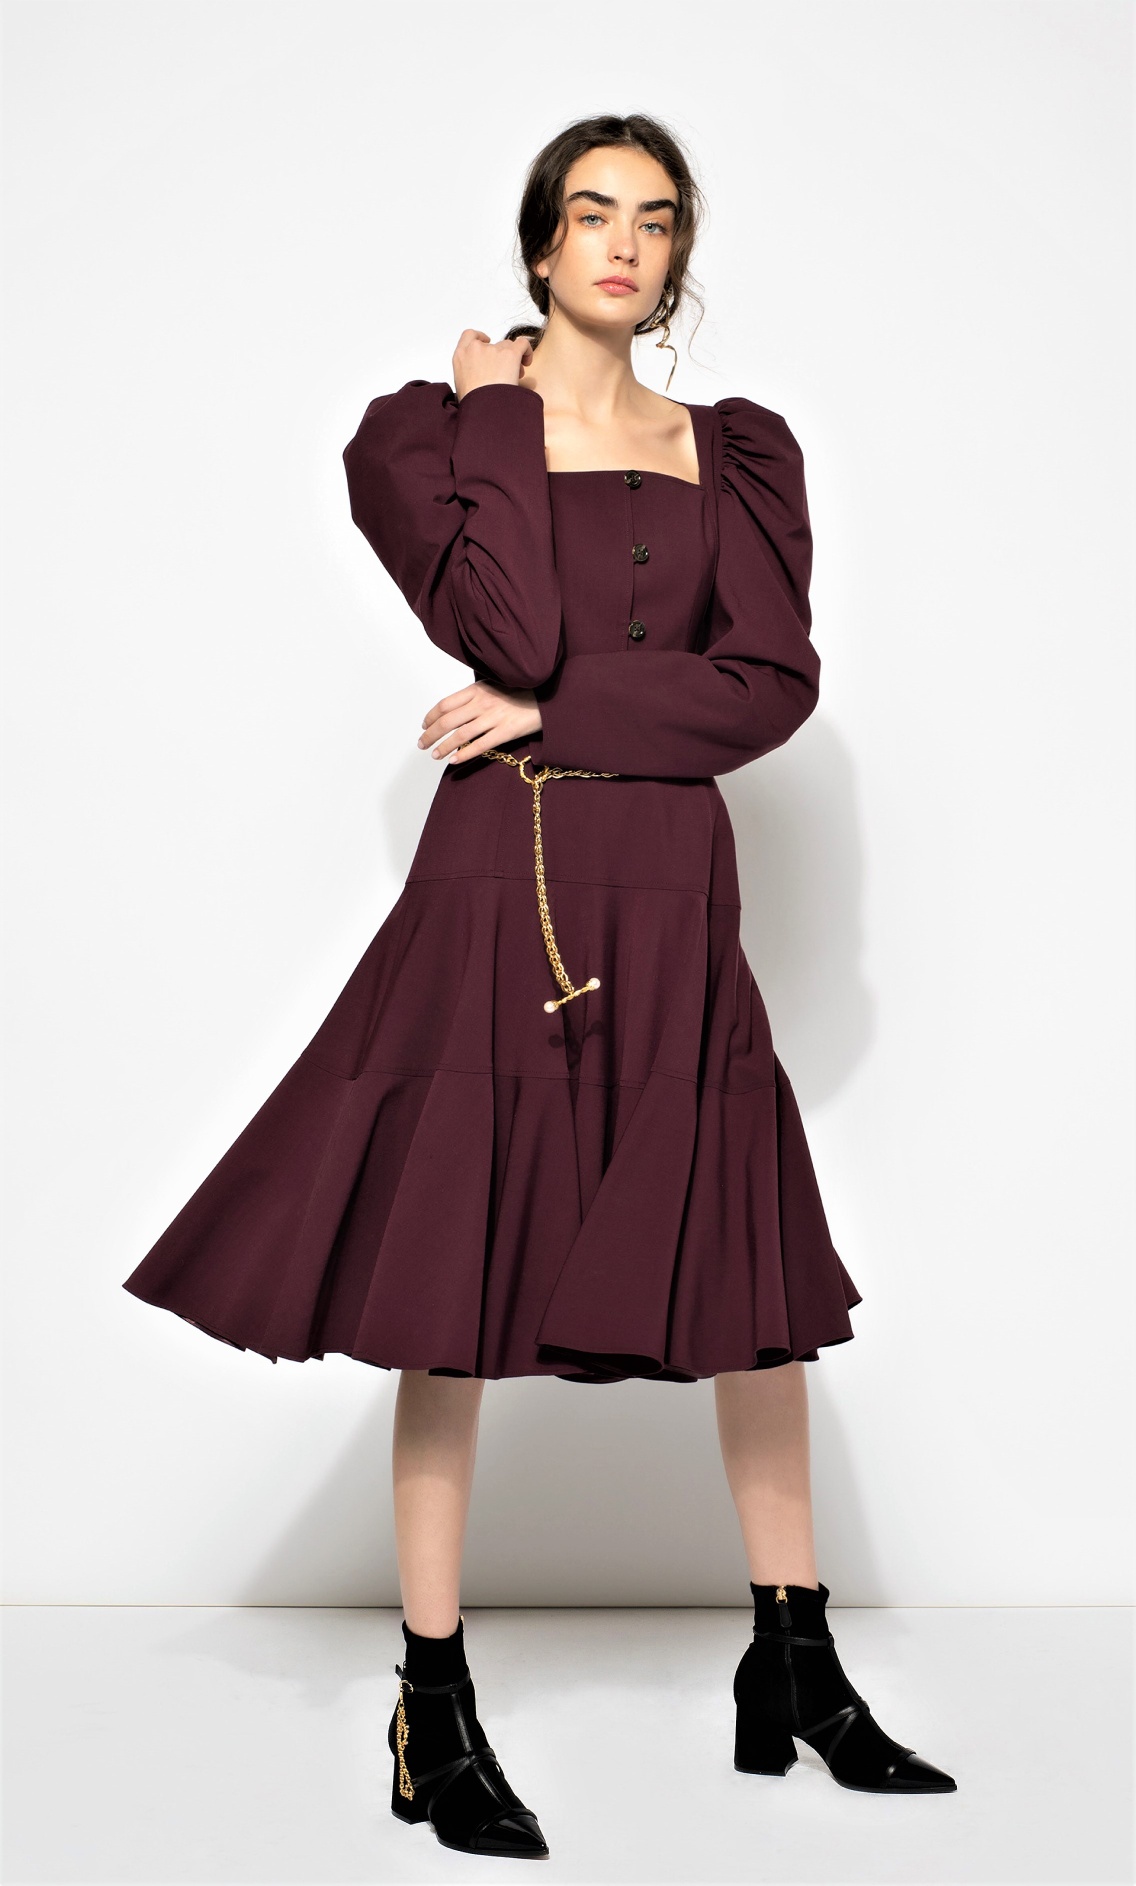 NYFW Adeam Fall 2-21 Vogue burgundt dress cropped.jpg